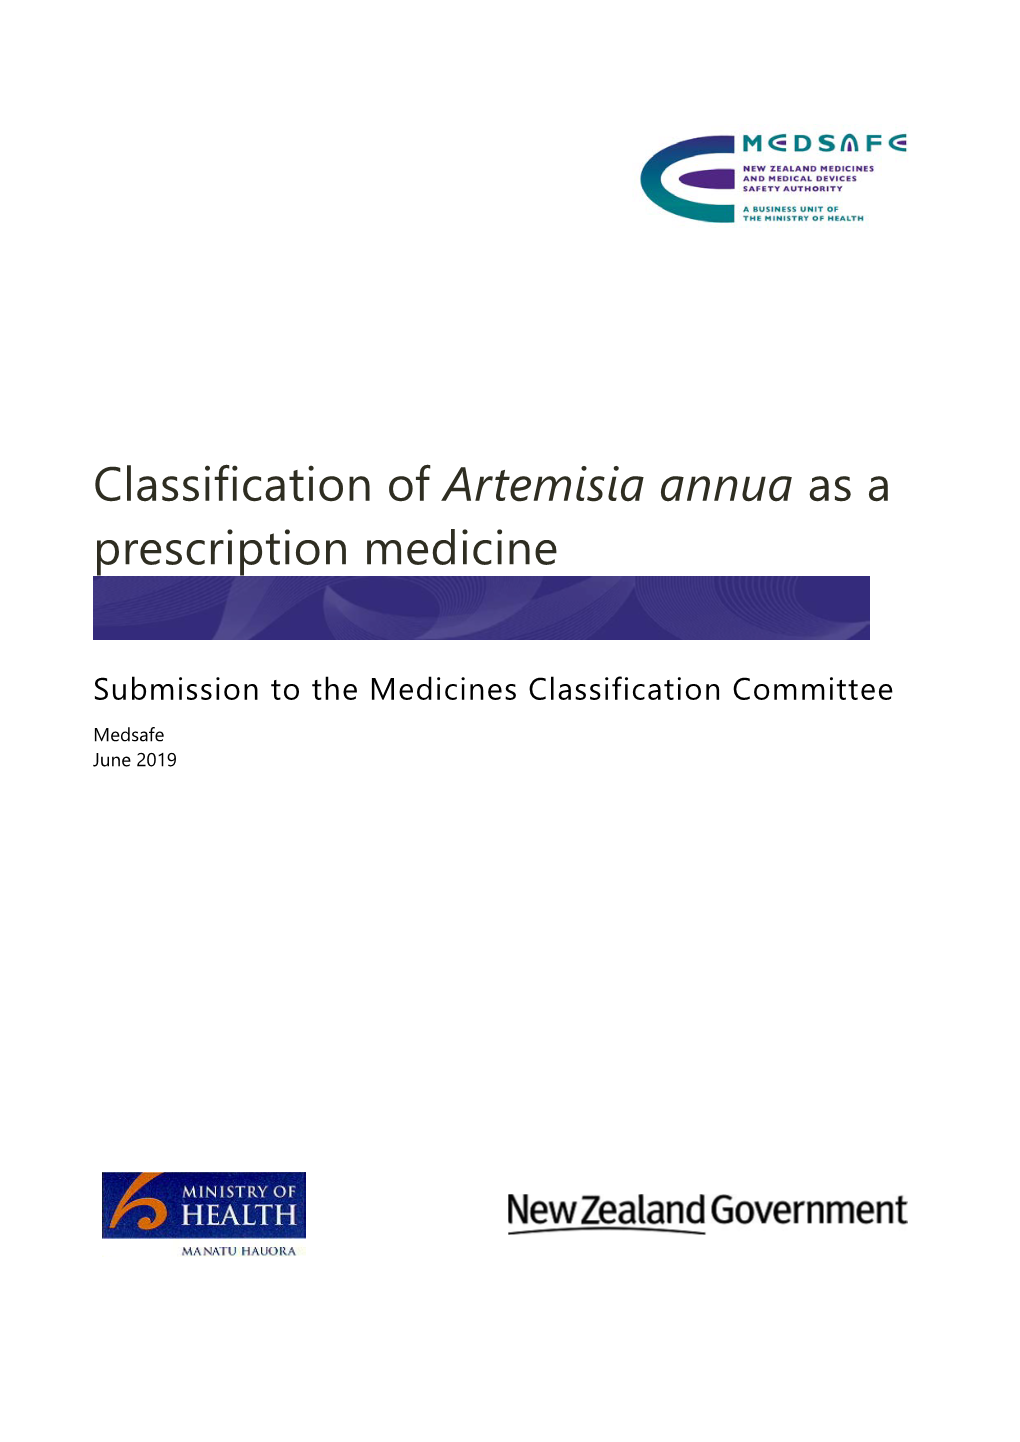 Classification of Artemisia Annua As a Prescription Medicine